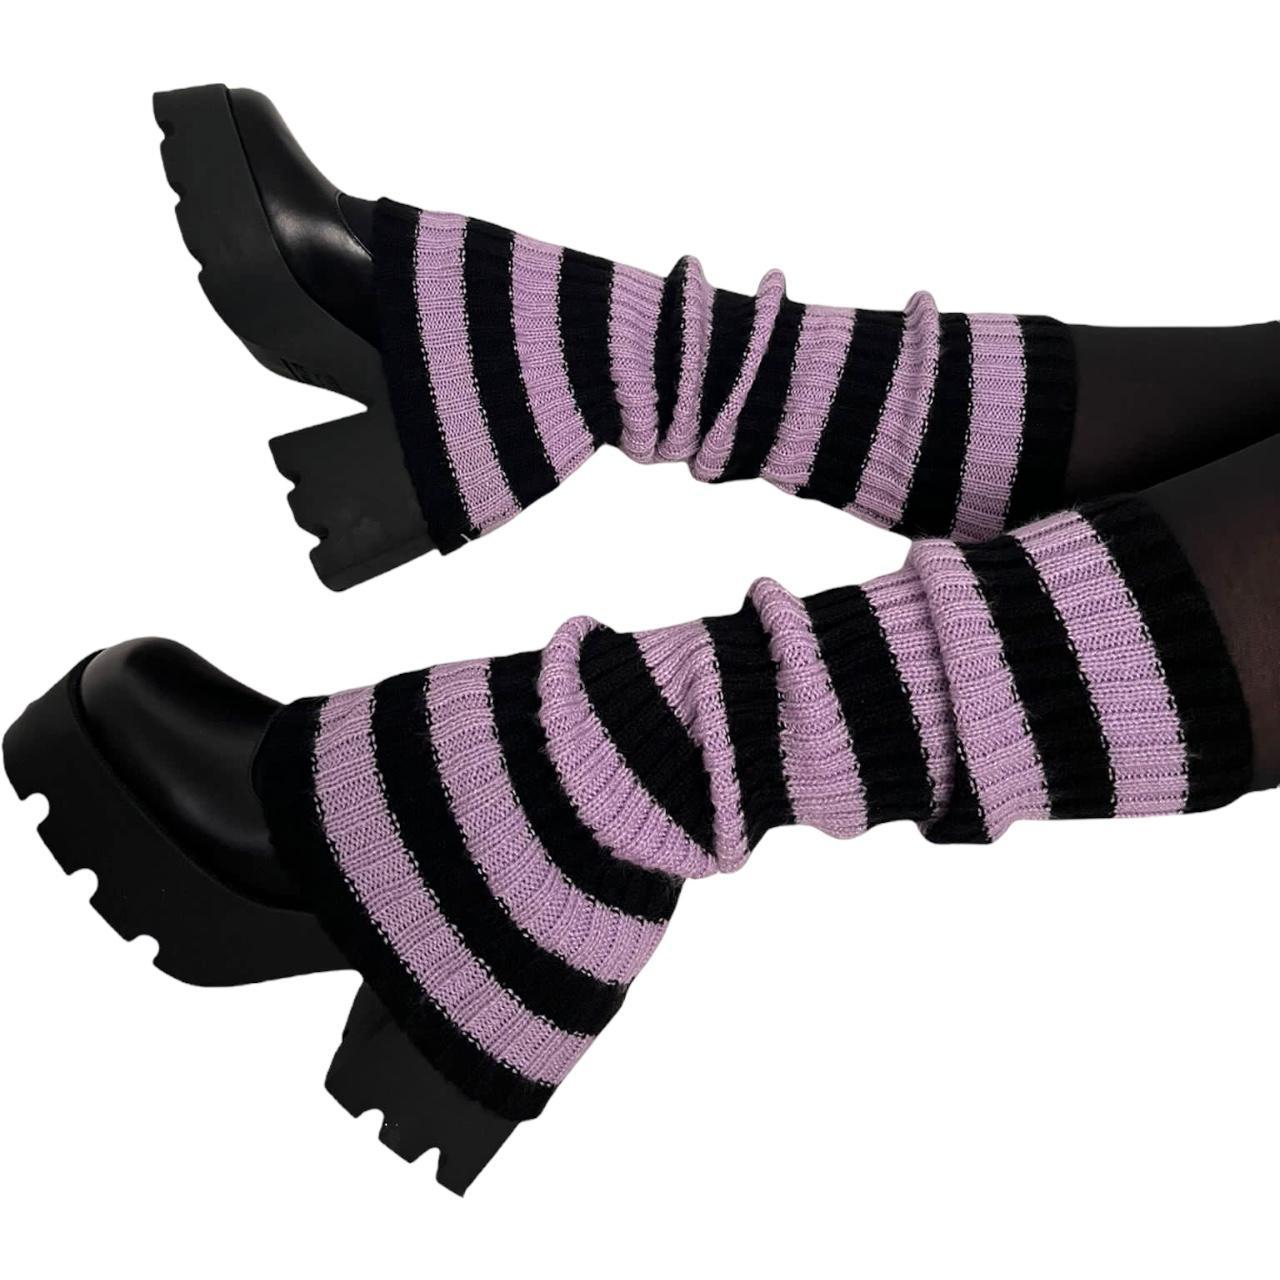 Tripp NYC Women's Purple and Black Hosiery-tights (2)